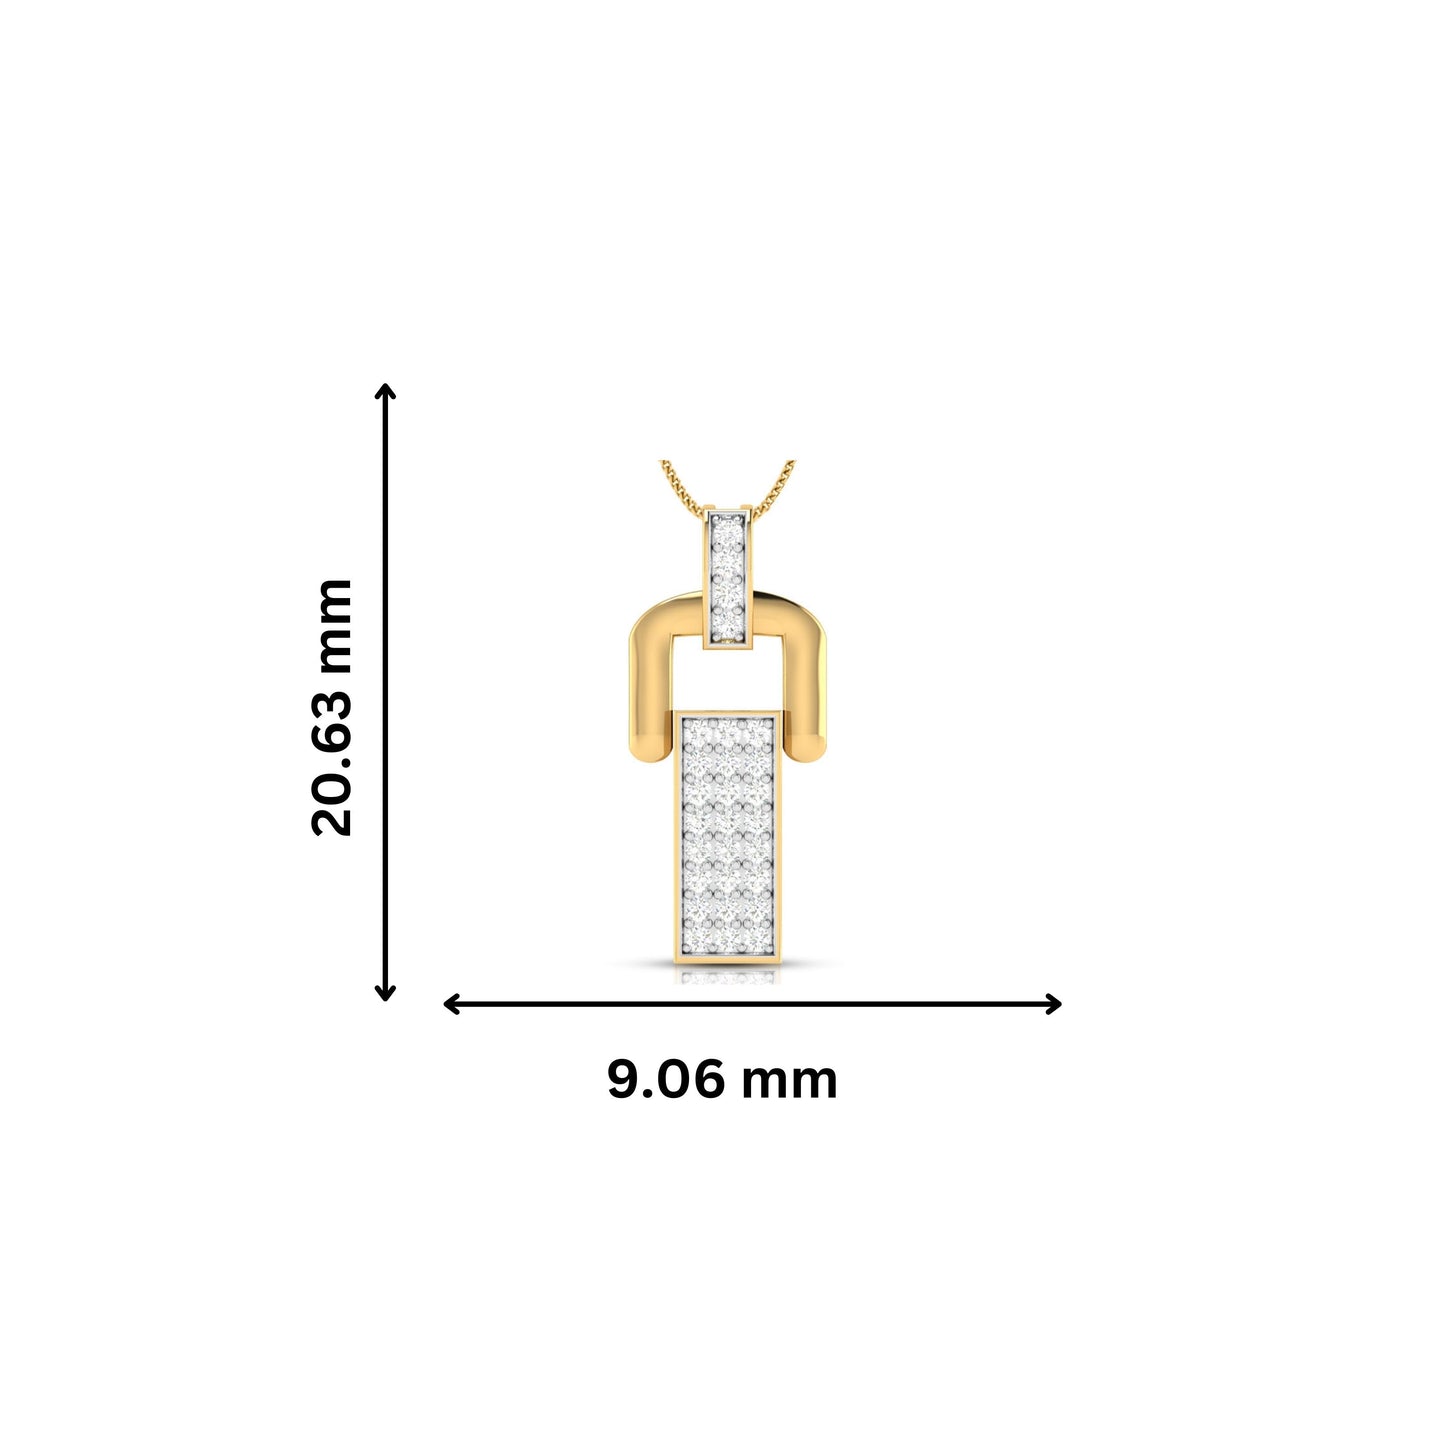 Osciller modern lab grown diamond pendant design Fiona Diamonds